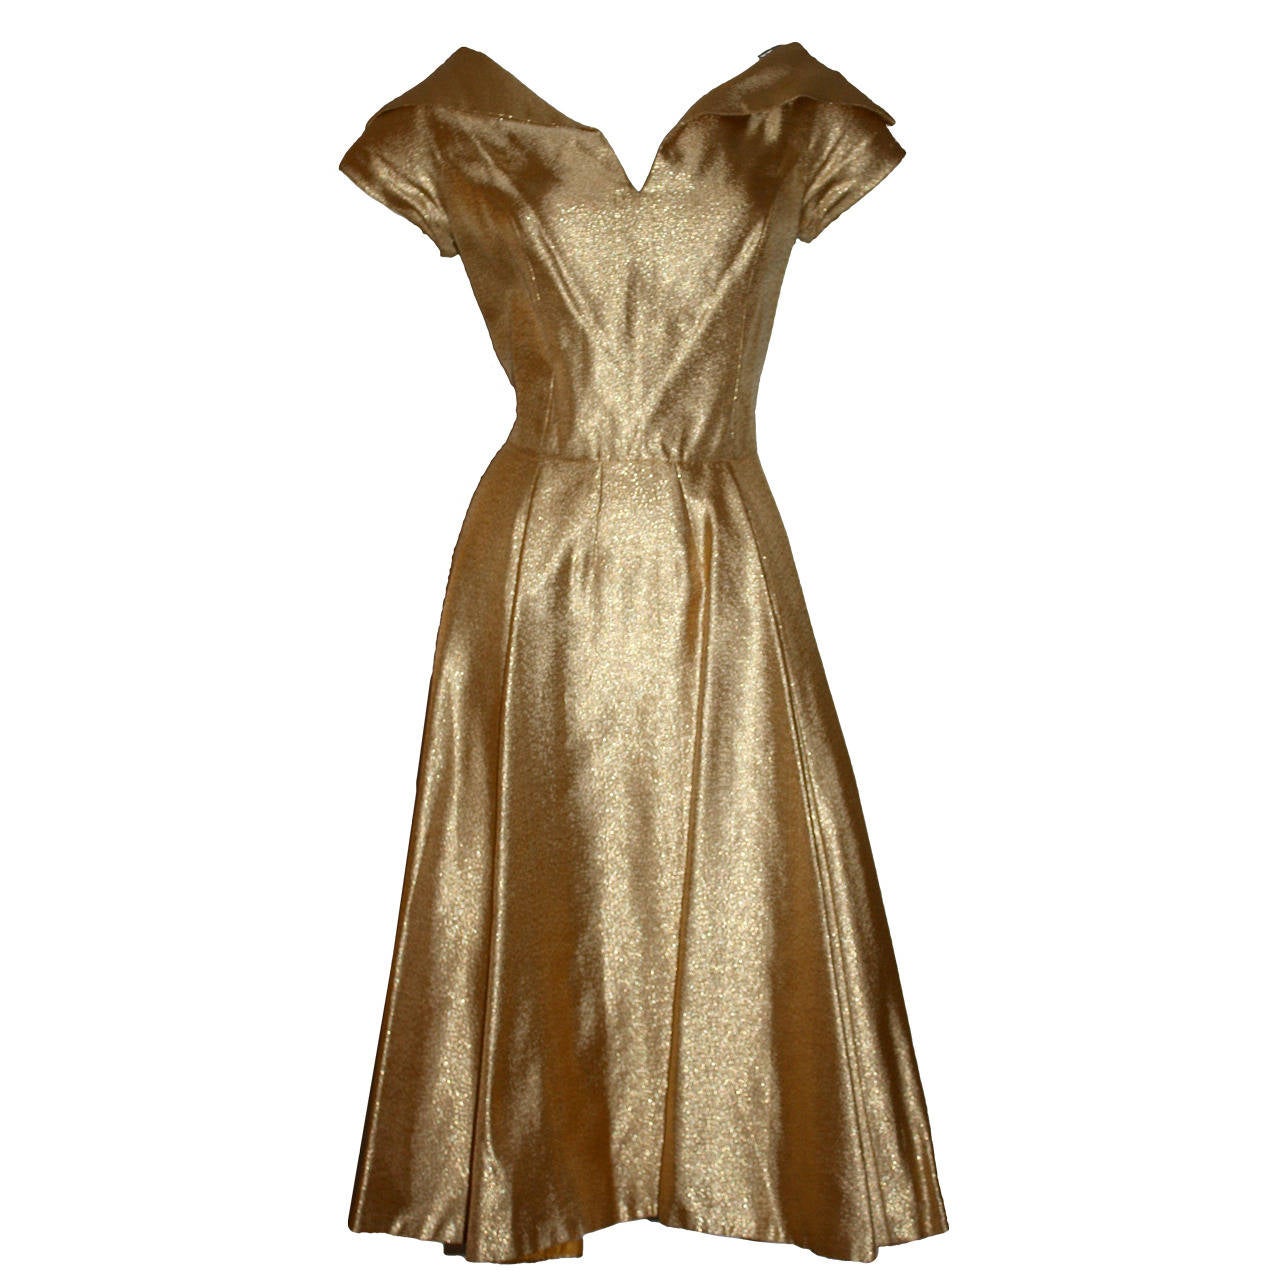 Wonderful 1950s Gold Metallic Vintage Cocktail Dress w/ Full Skirt